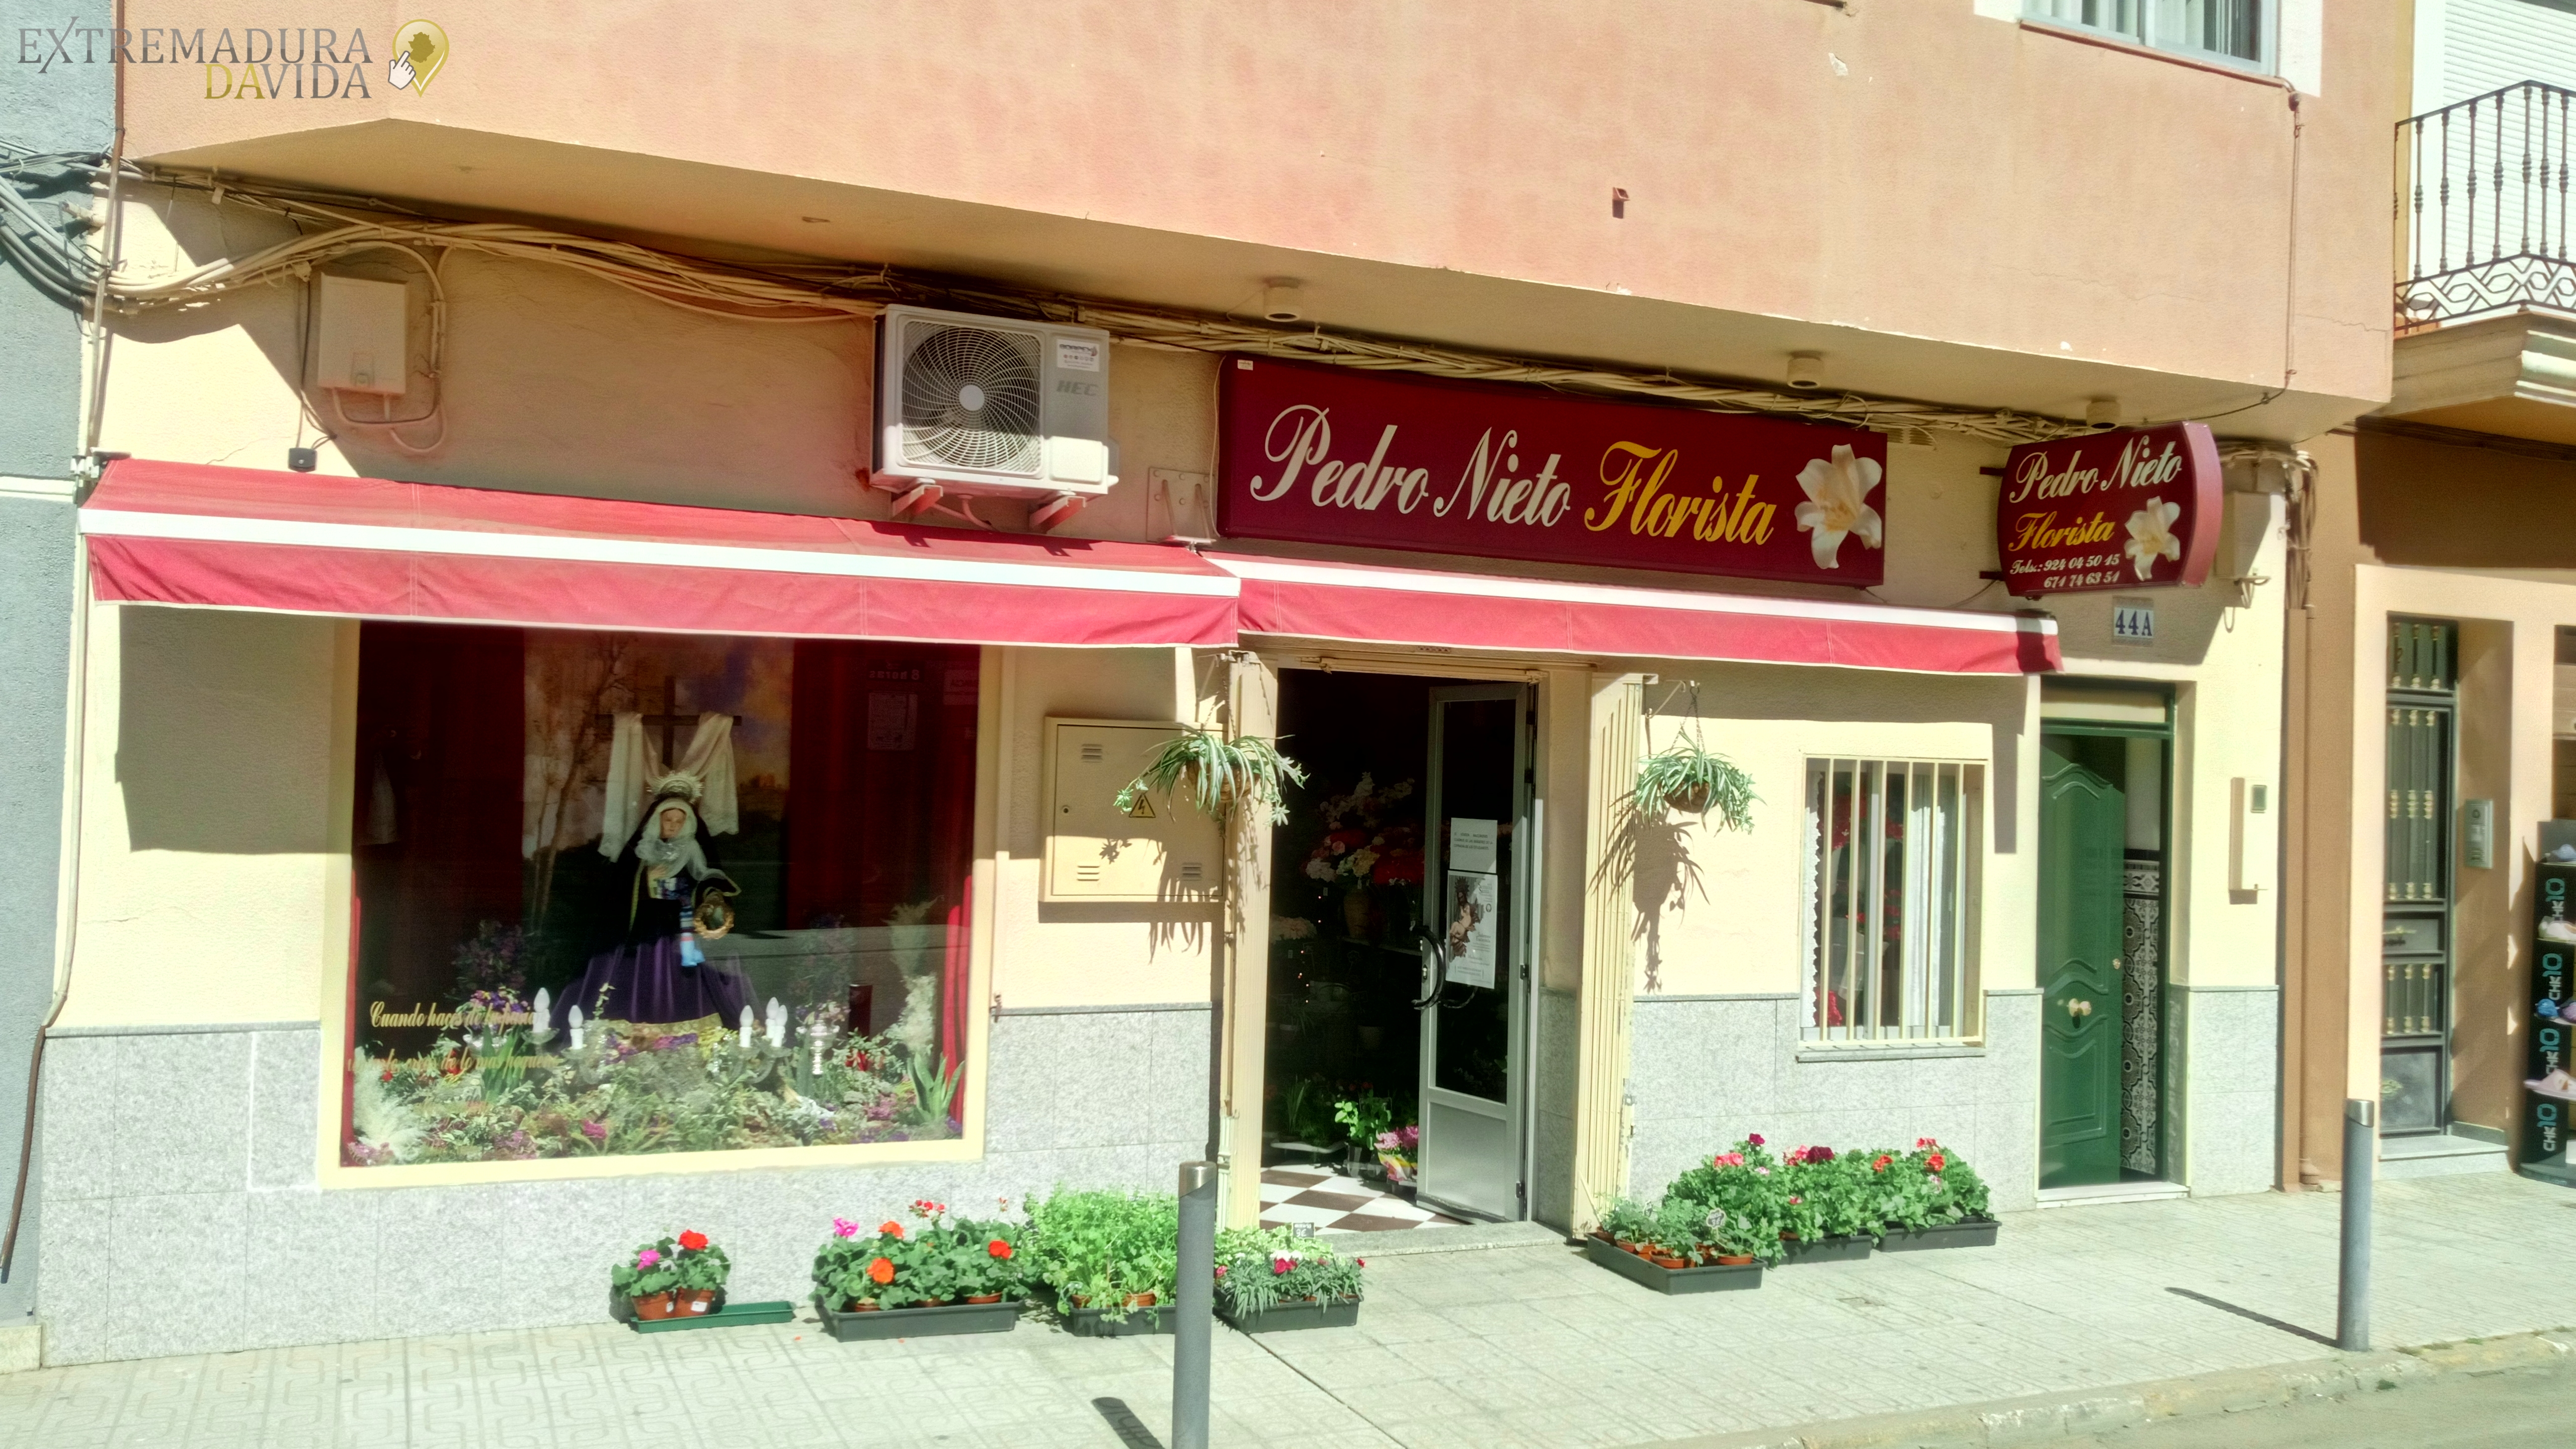 La mejor floristería de Almendralejo Pedro Nieto 